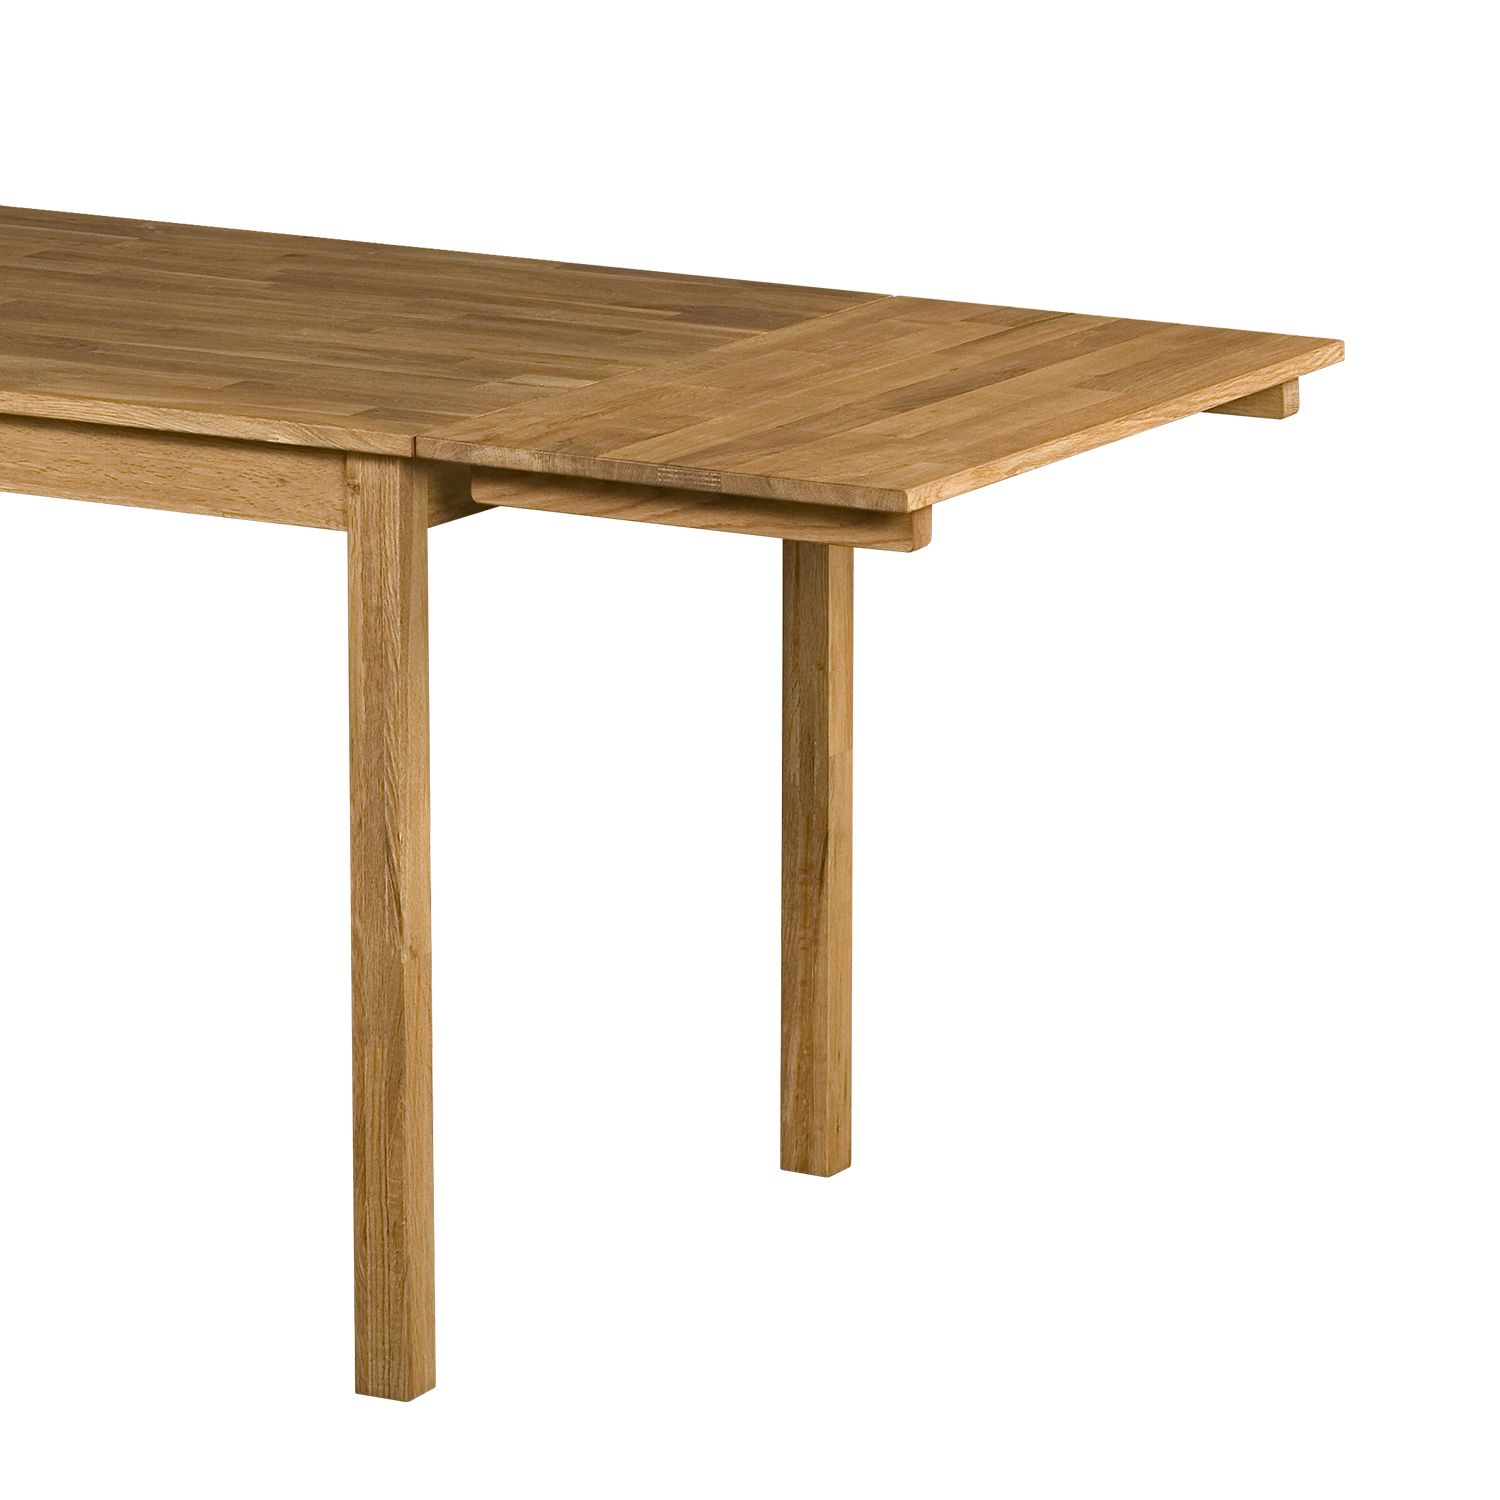 Výsuvný díl stolu 4841 dub - IDEA nábytek